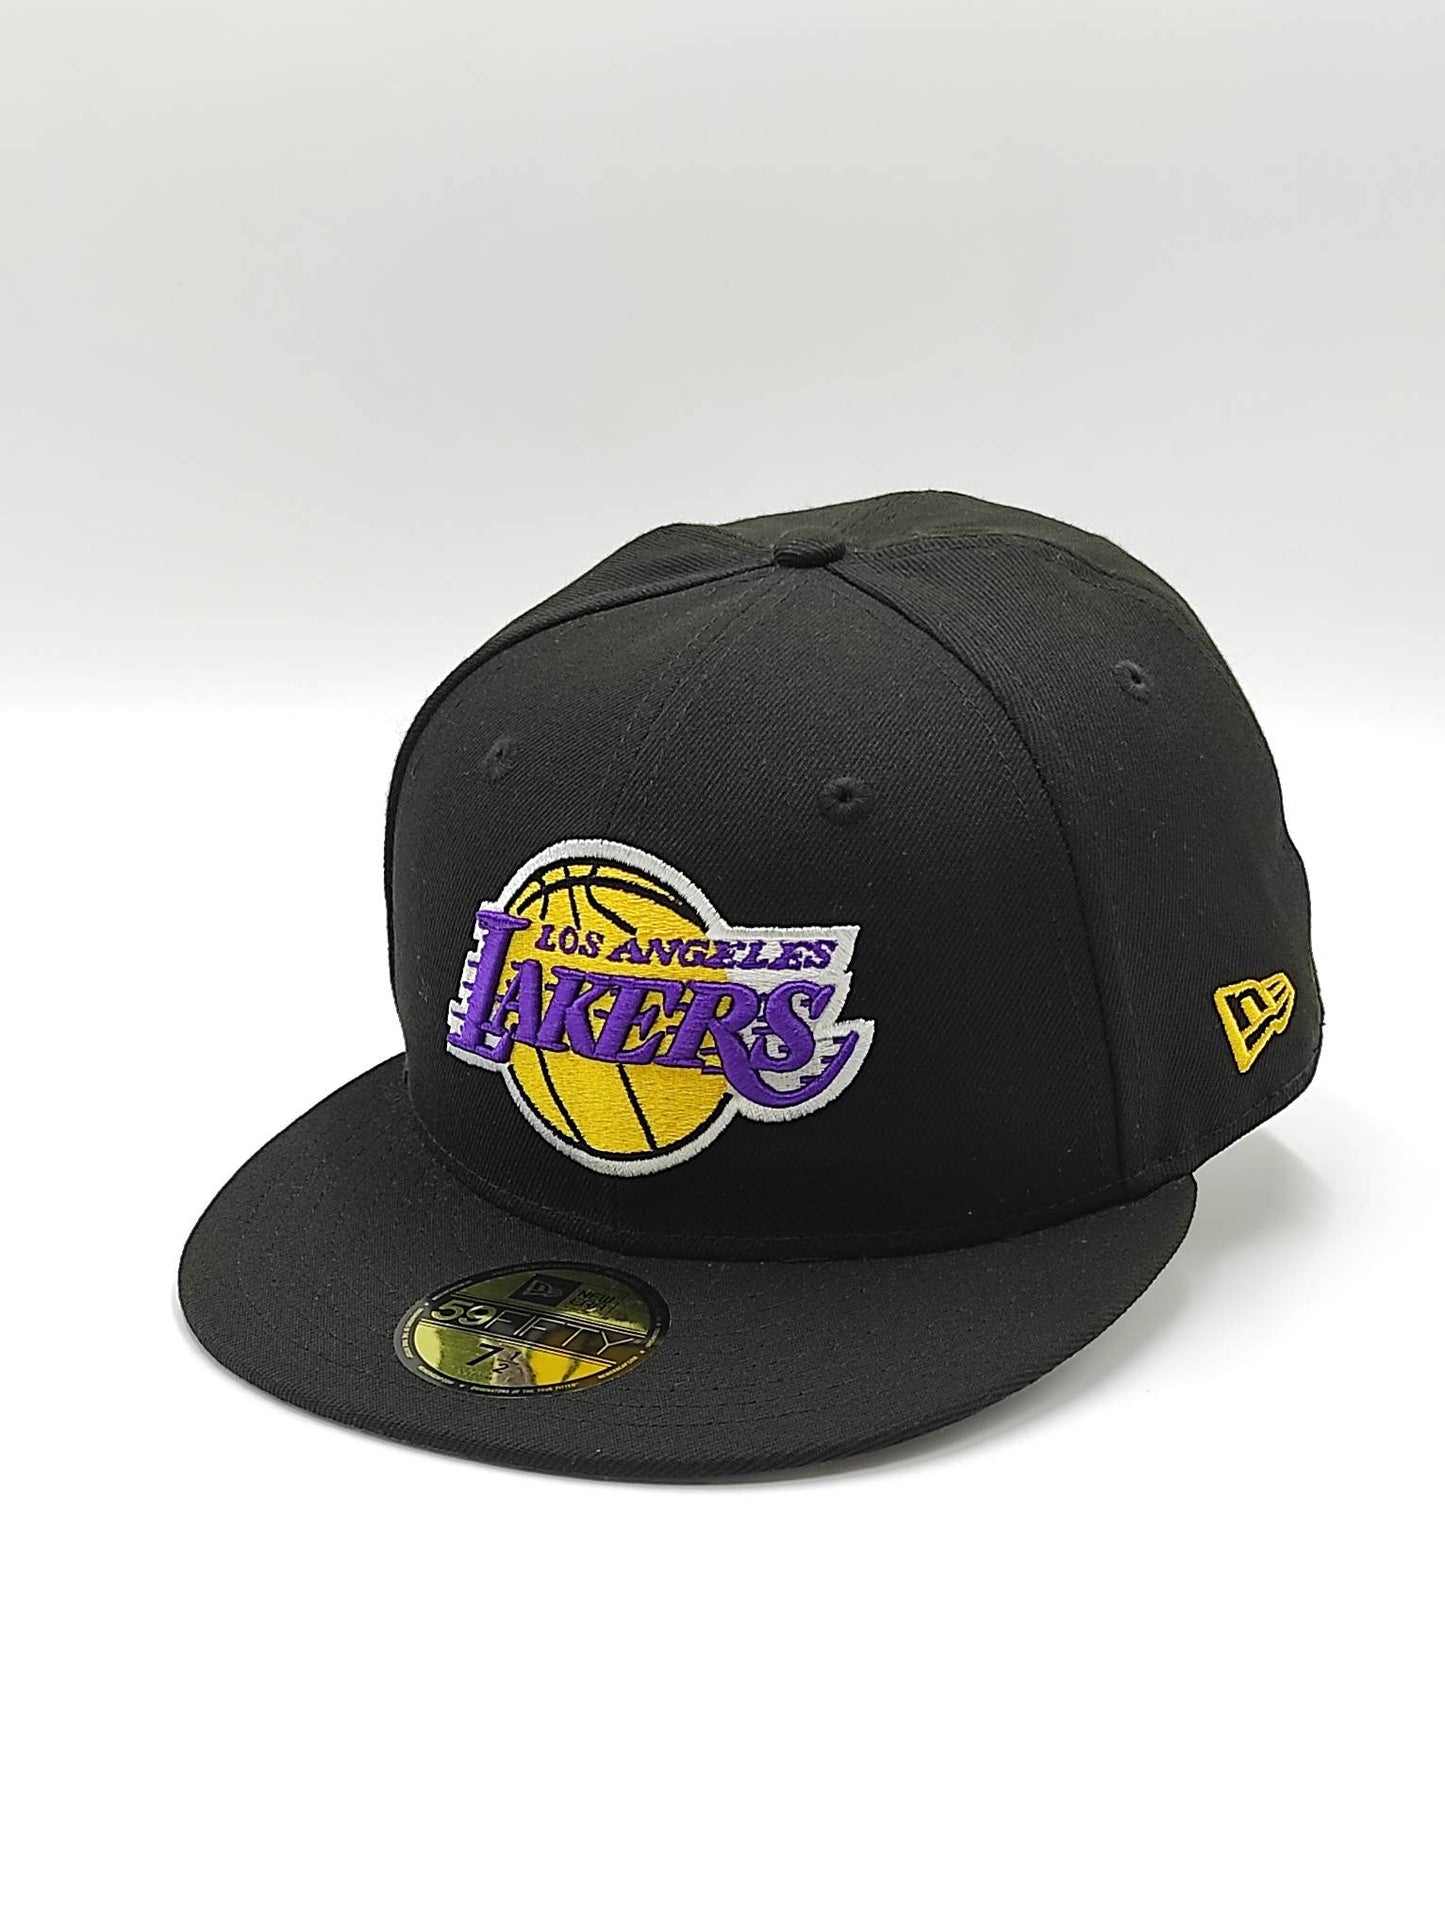 New Era Los Angeles Lakers 59fifty black